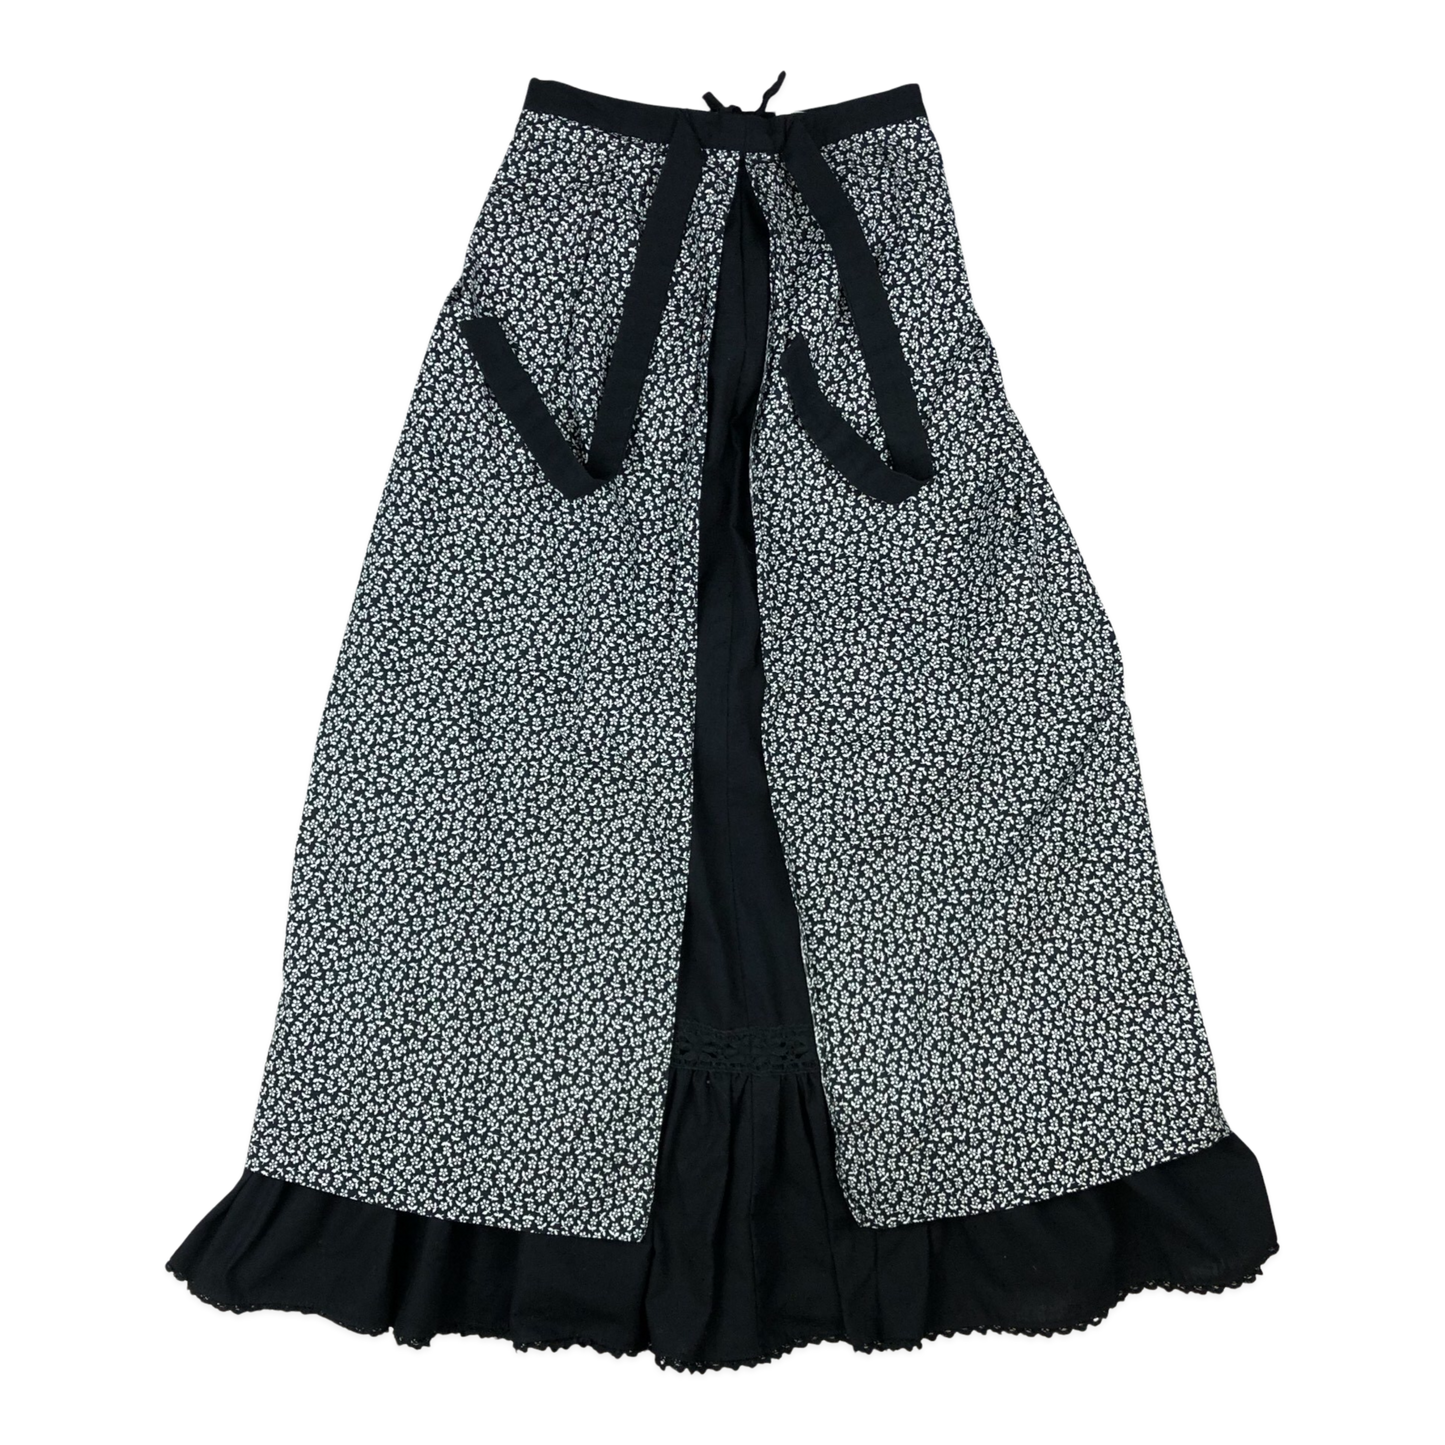 Vintage 70s Layered Black and White Floral Print Folk Skirt 8